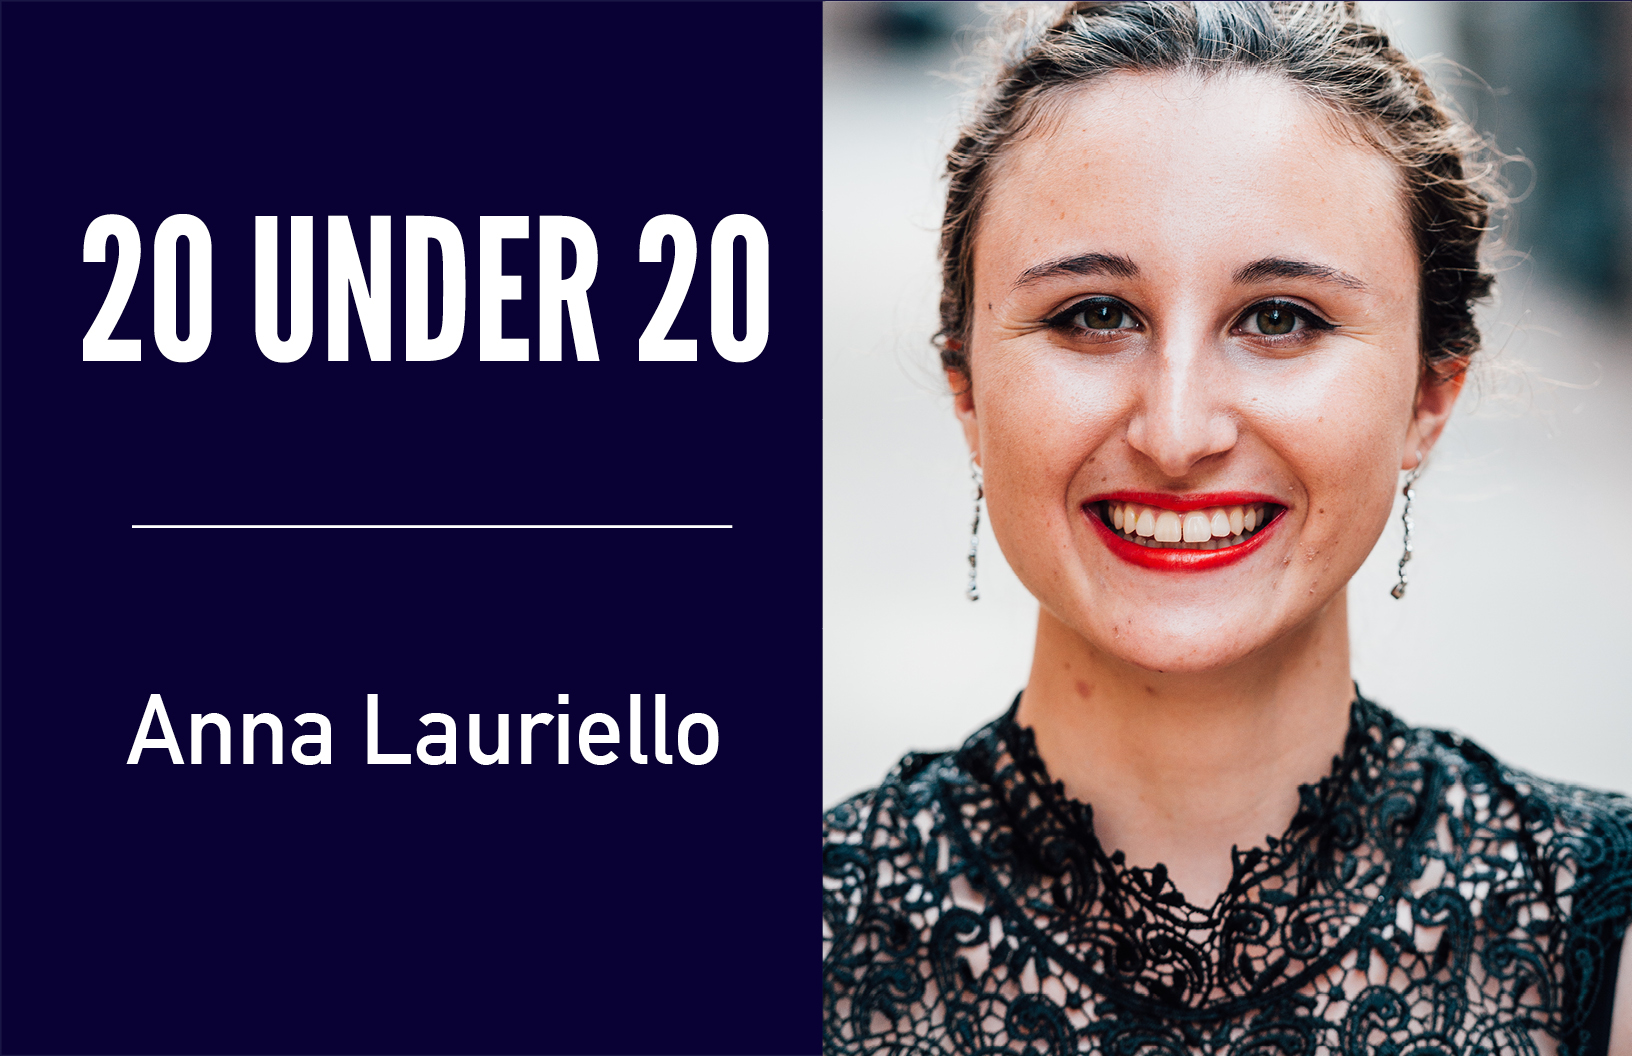 Anna-Lauriello-20-under-20